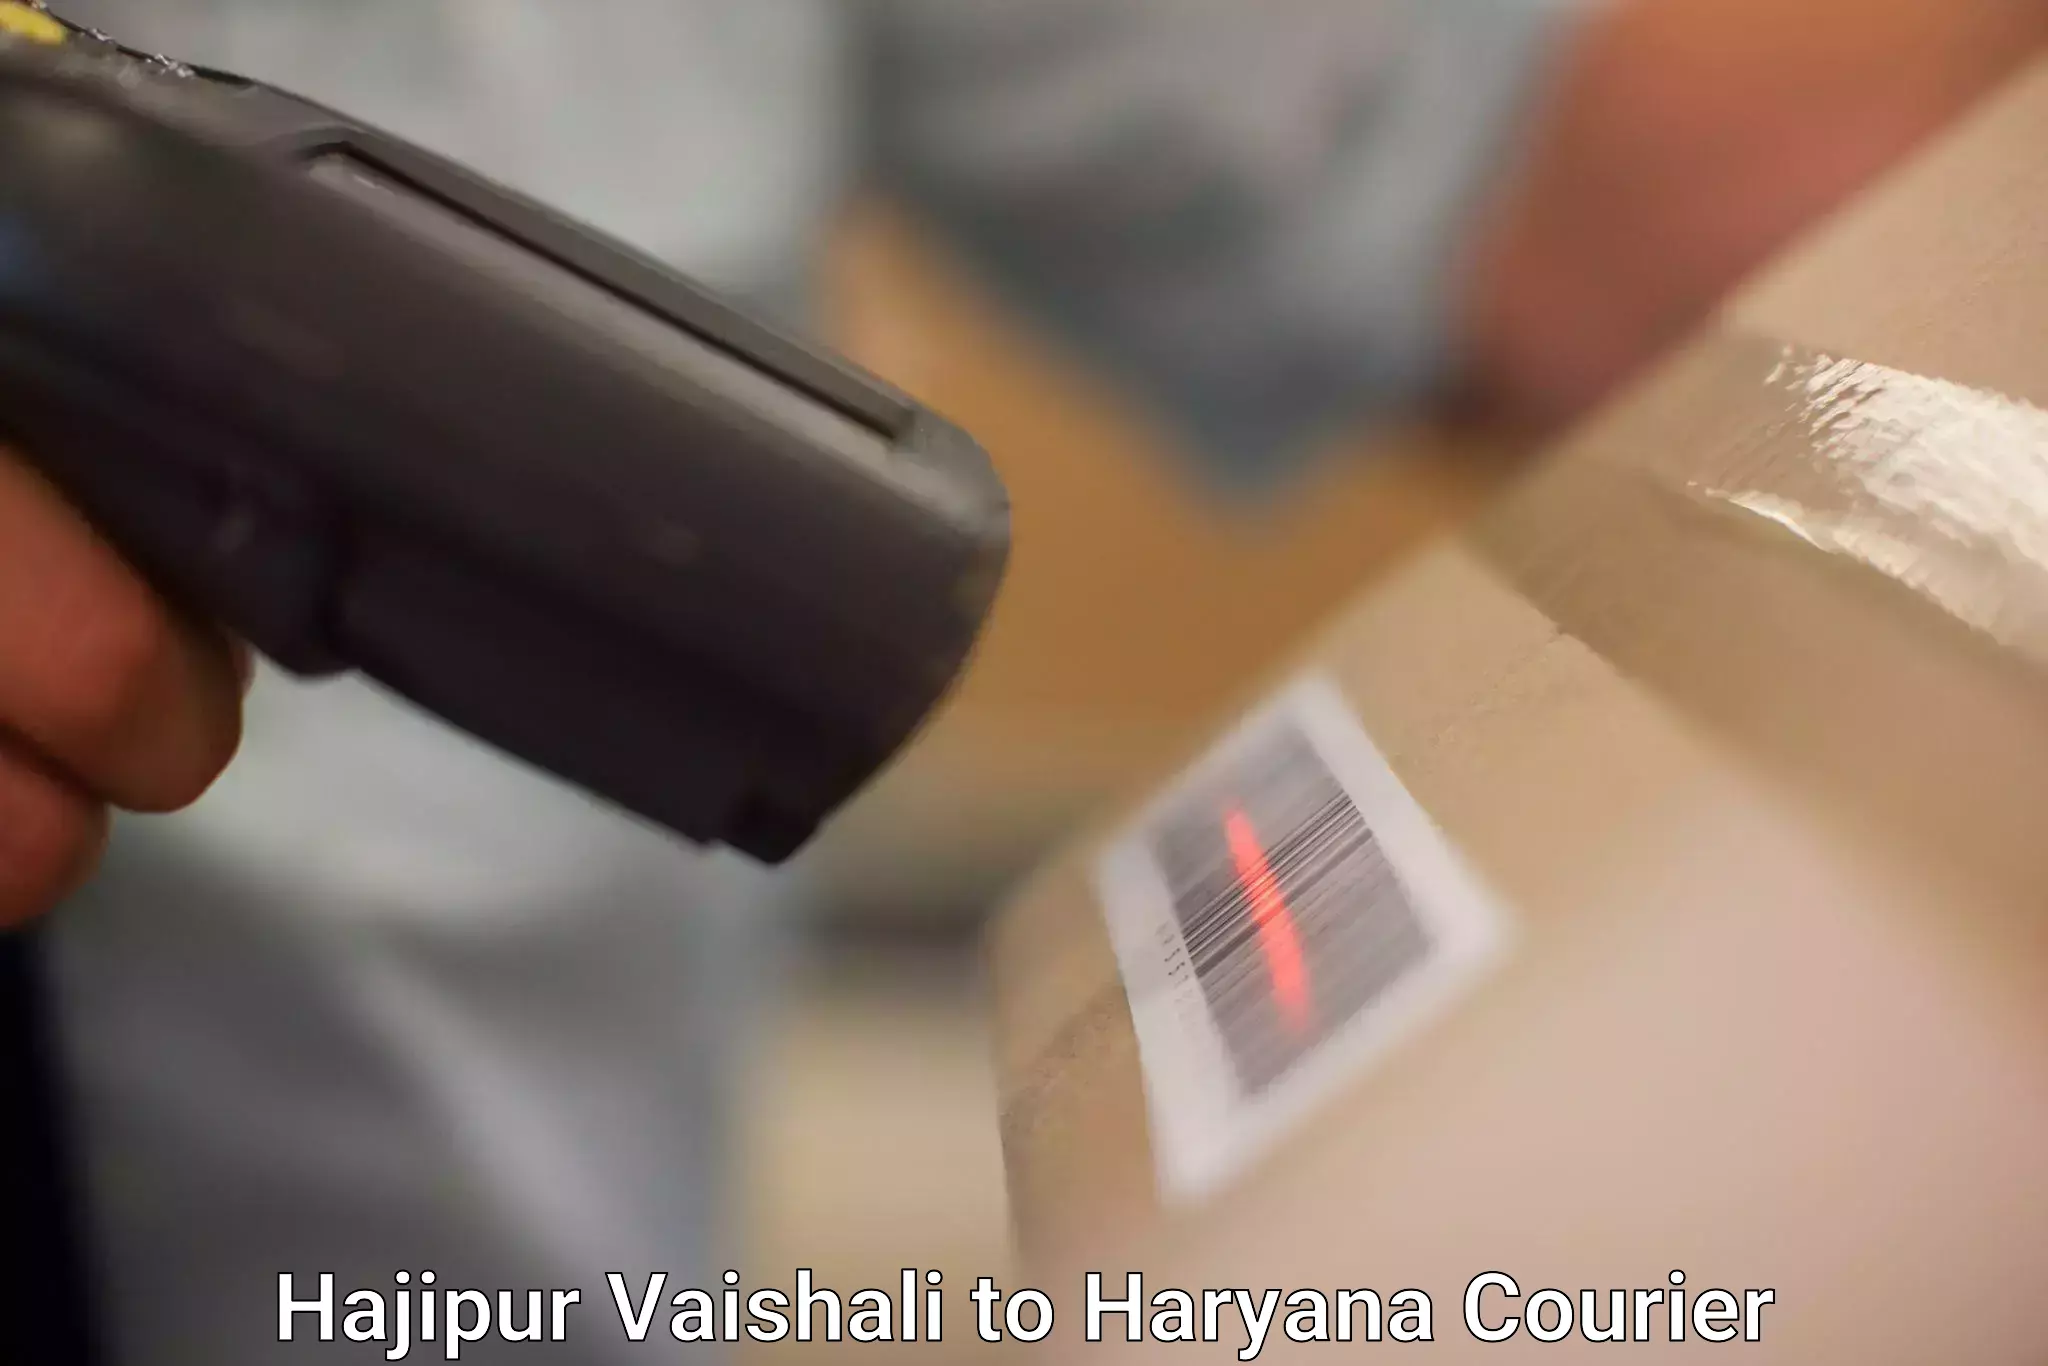 Reliable courier service Hajipur Vaishali to NCR Haryana